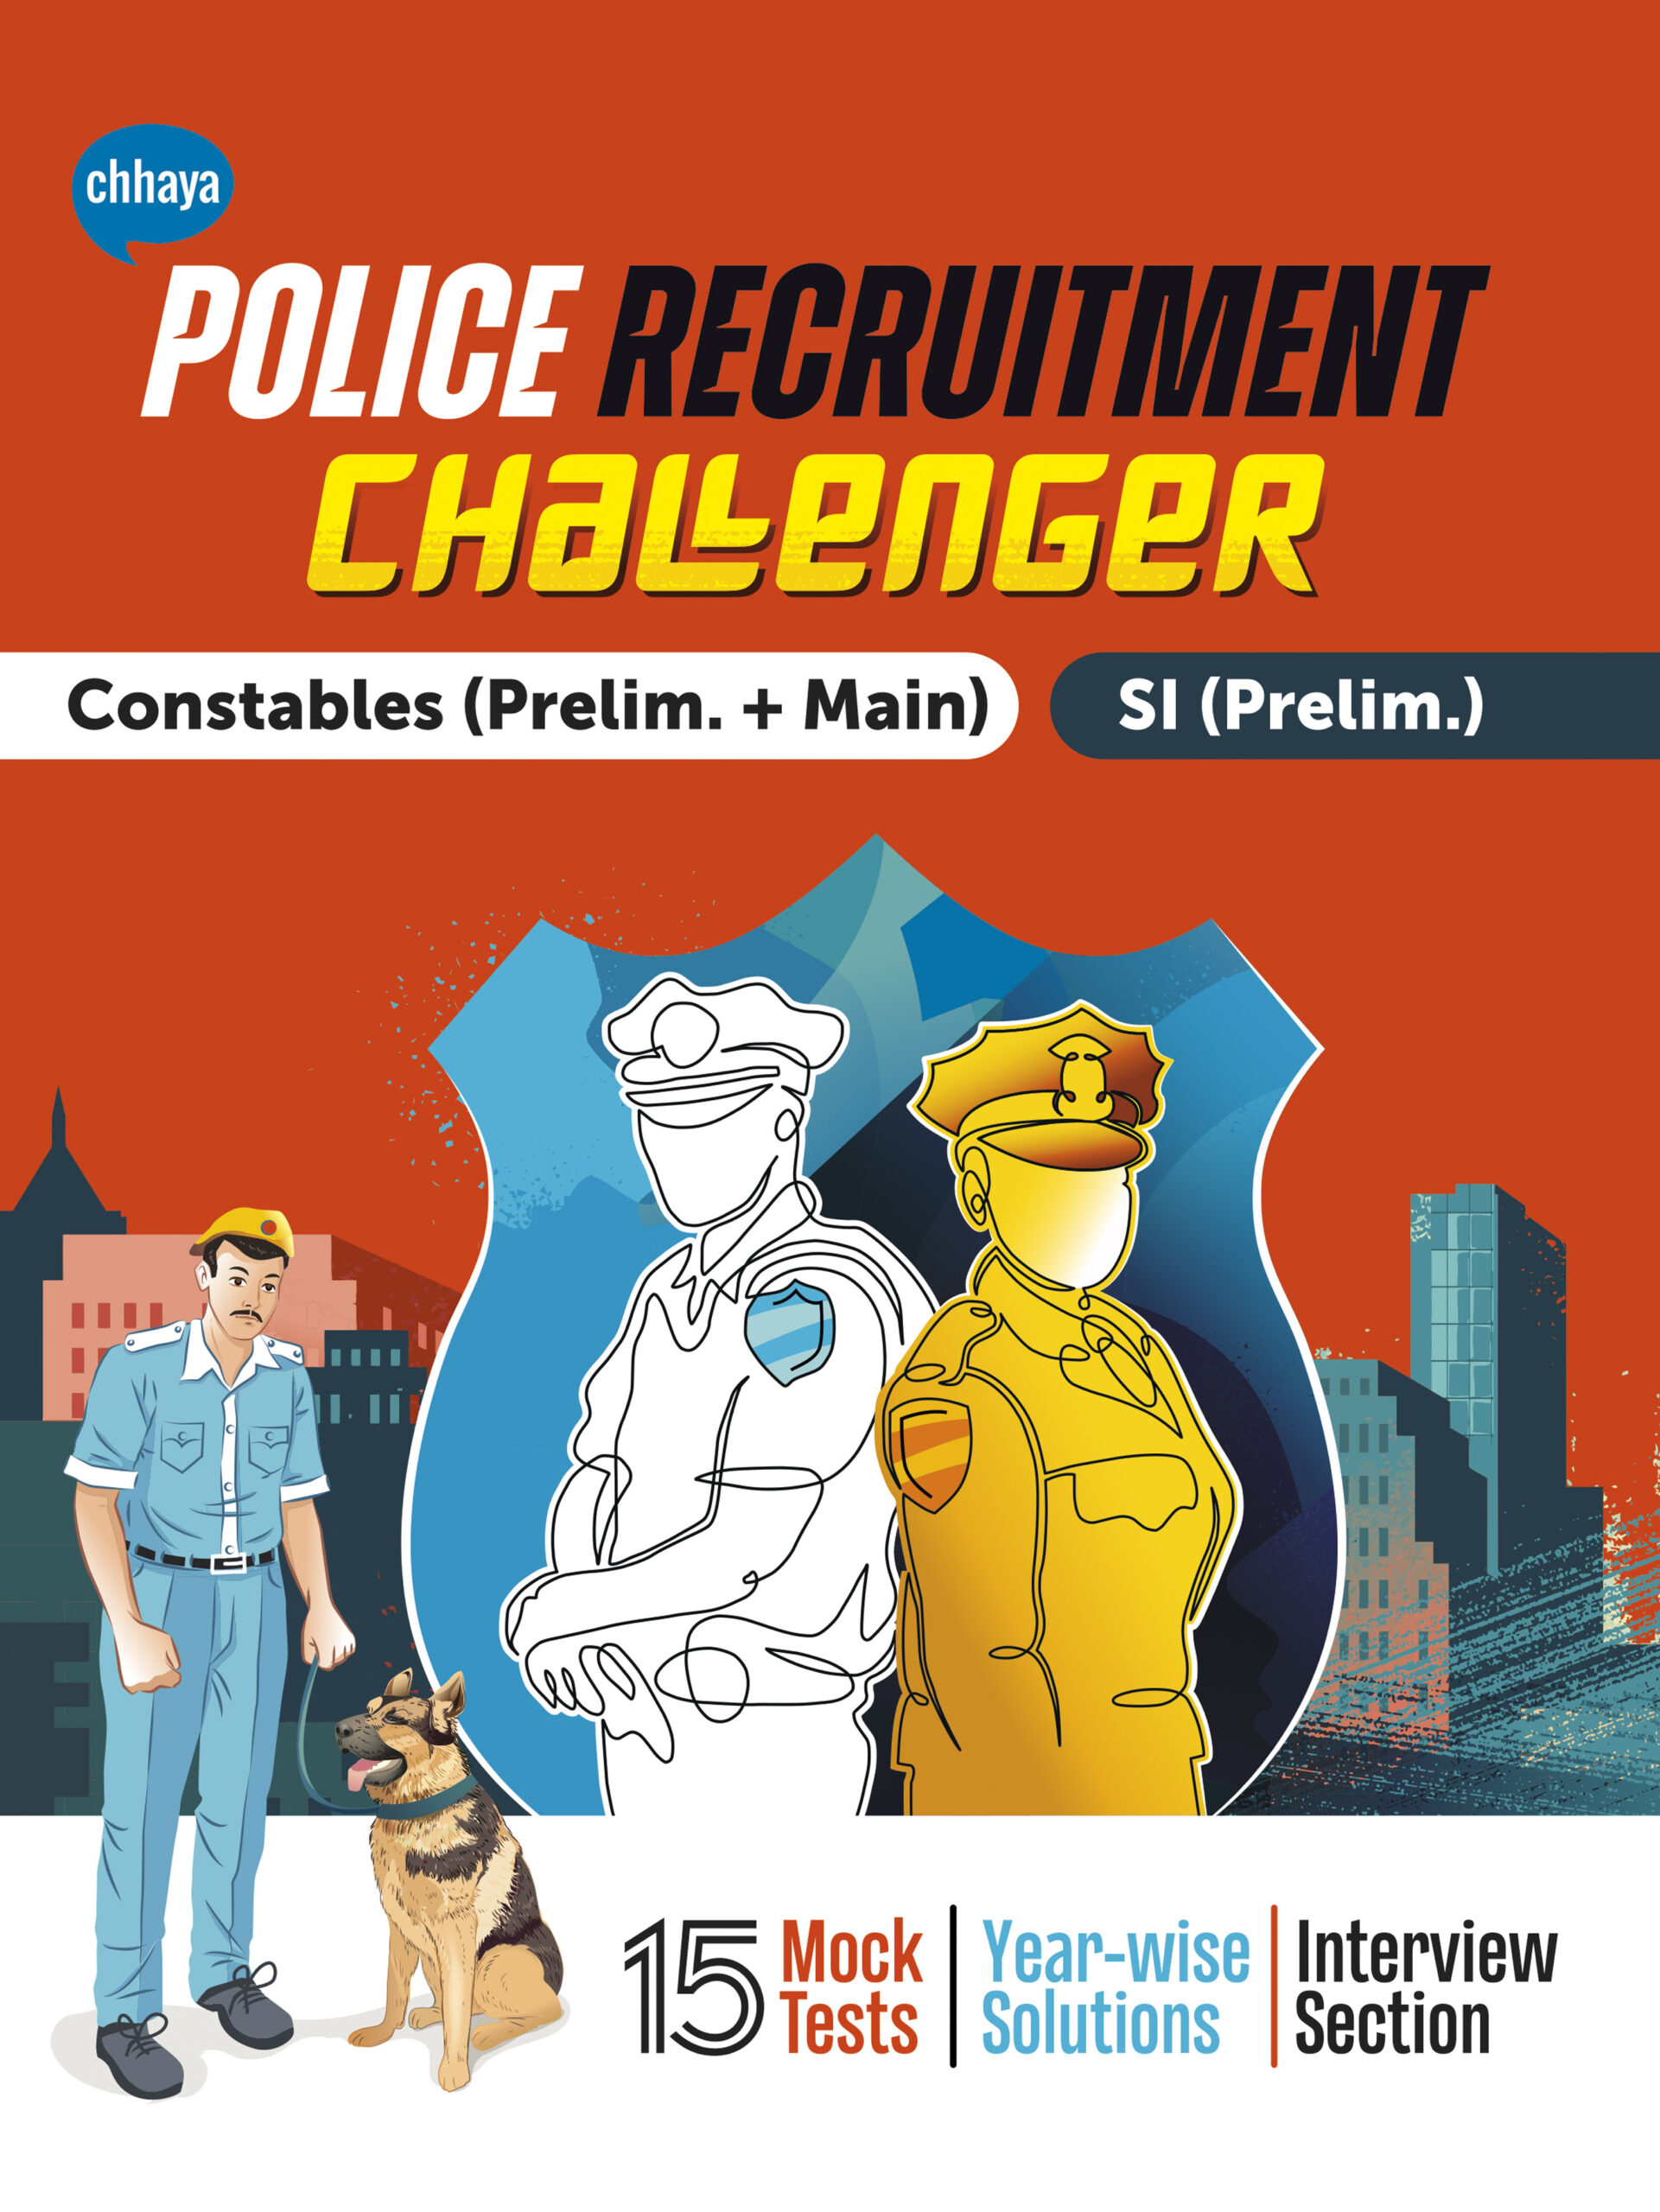 Police Recruitment Challenger